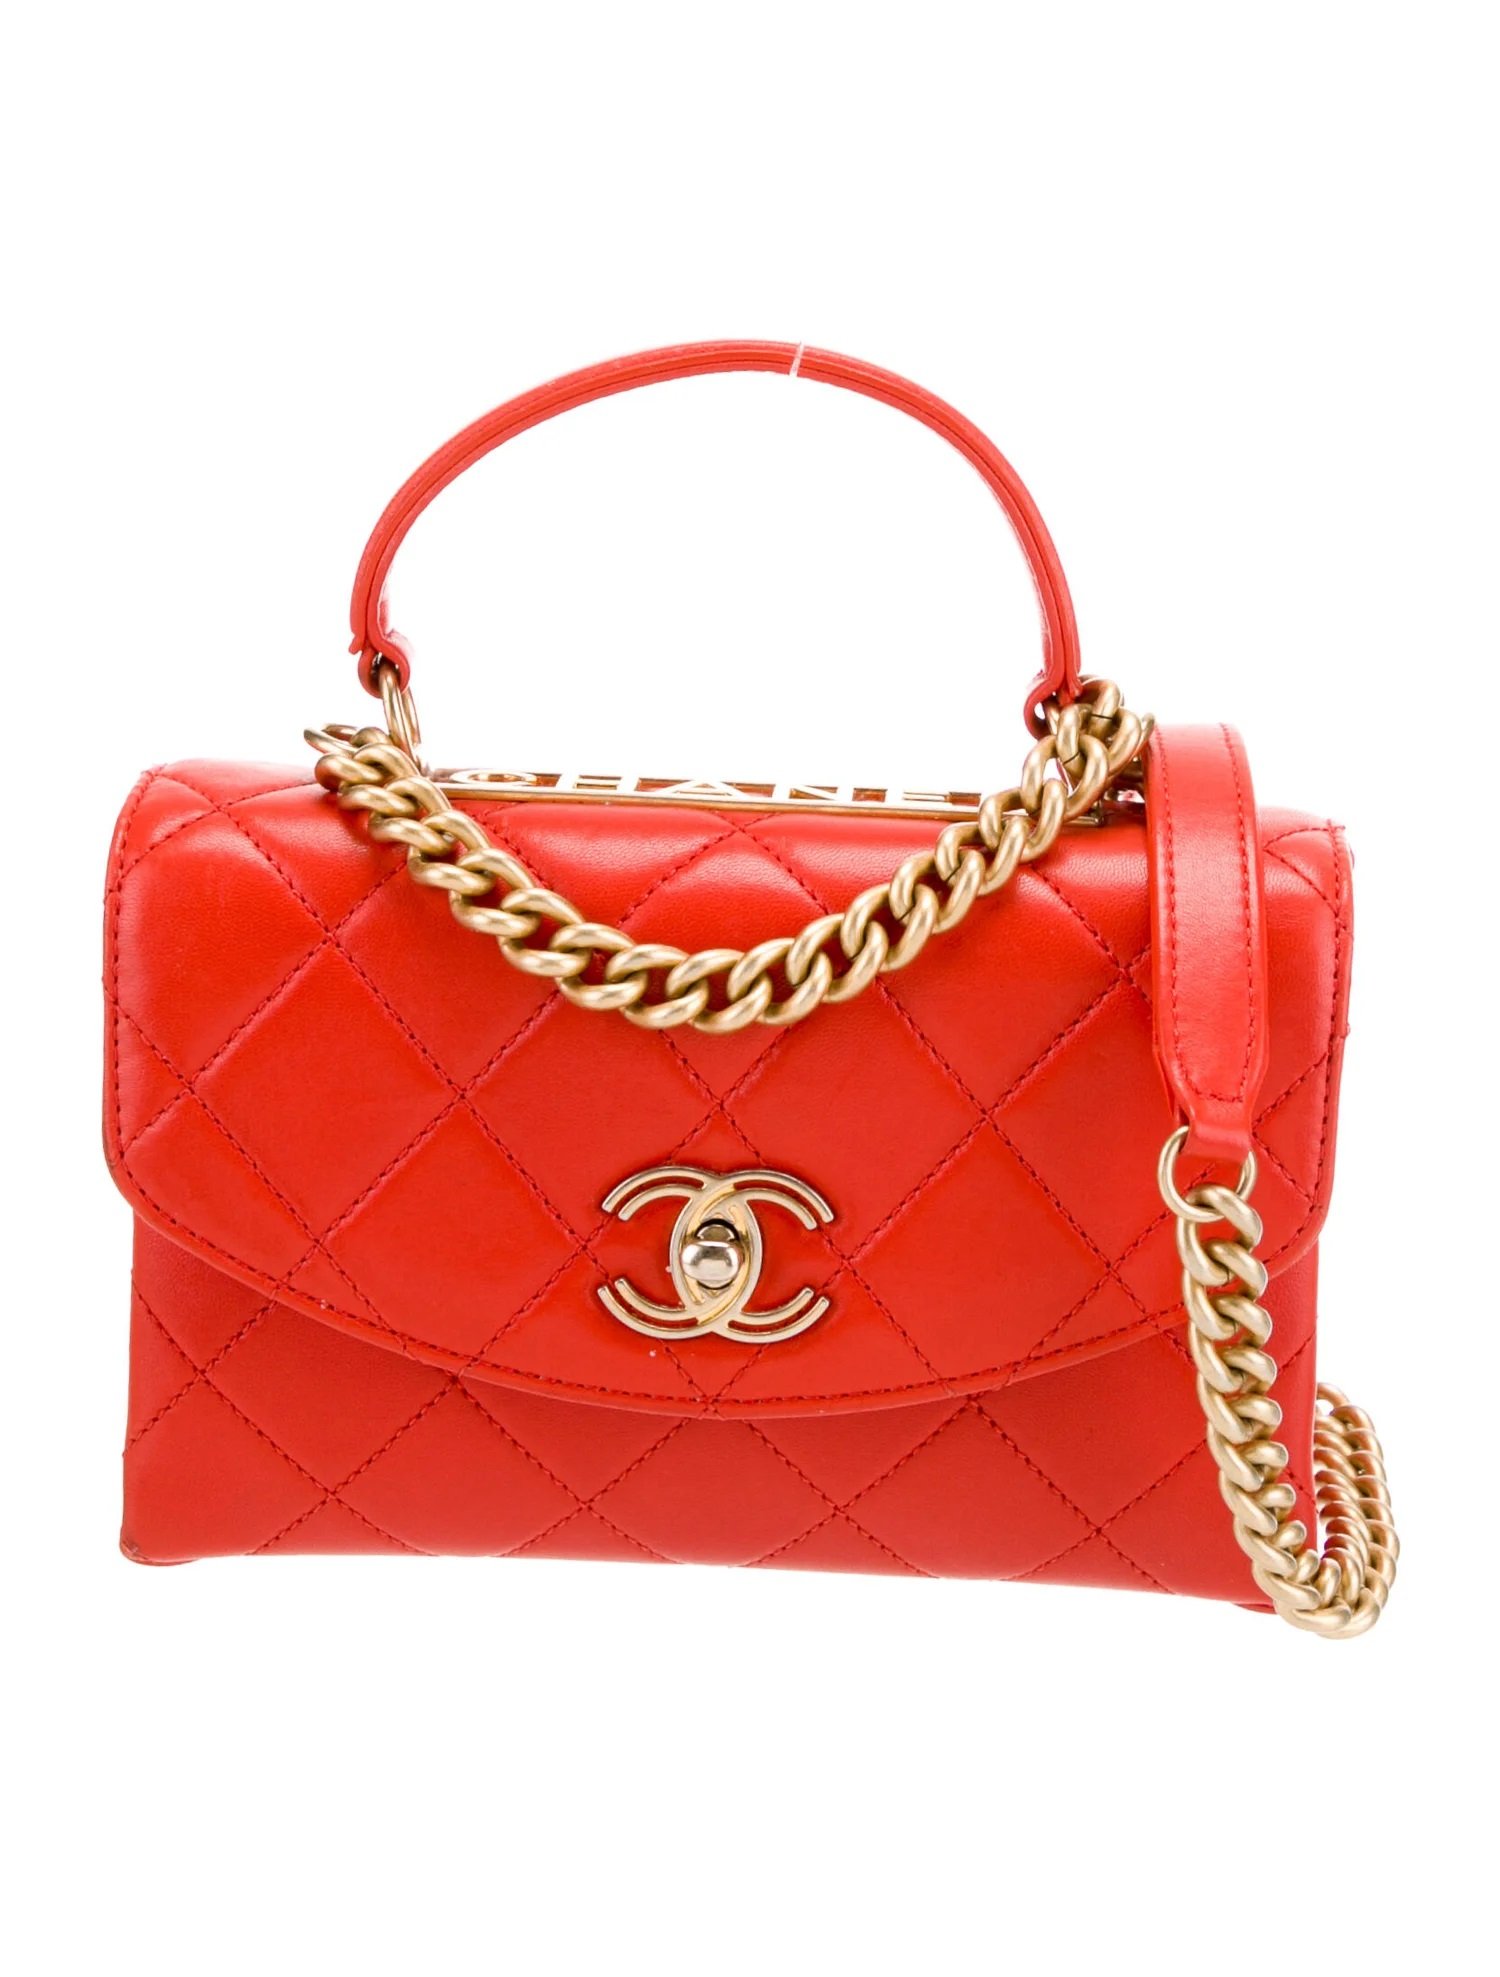 Chanel AS1174 Trendy Spirit Bag in Red.jpg